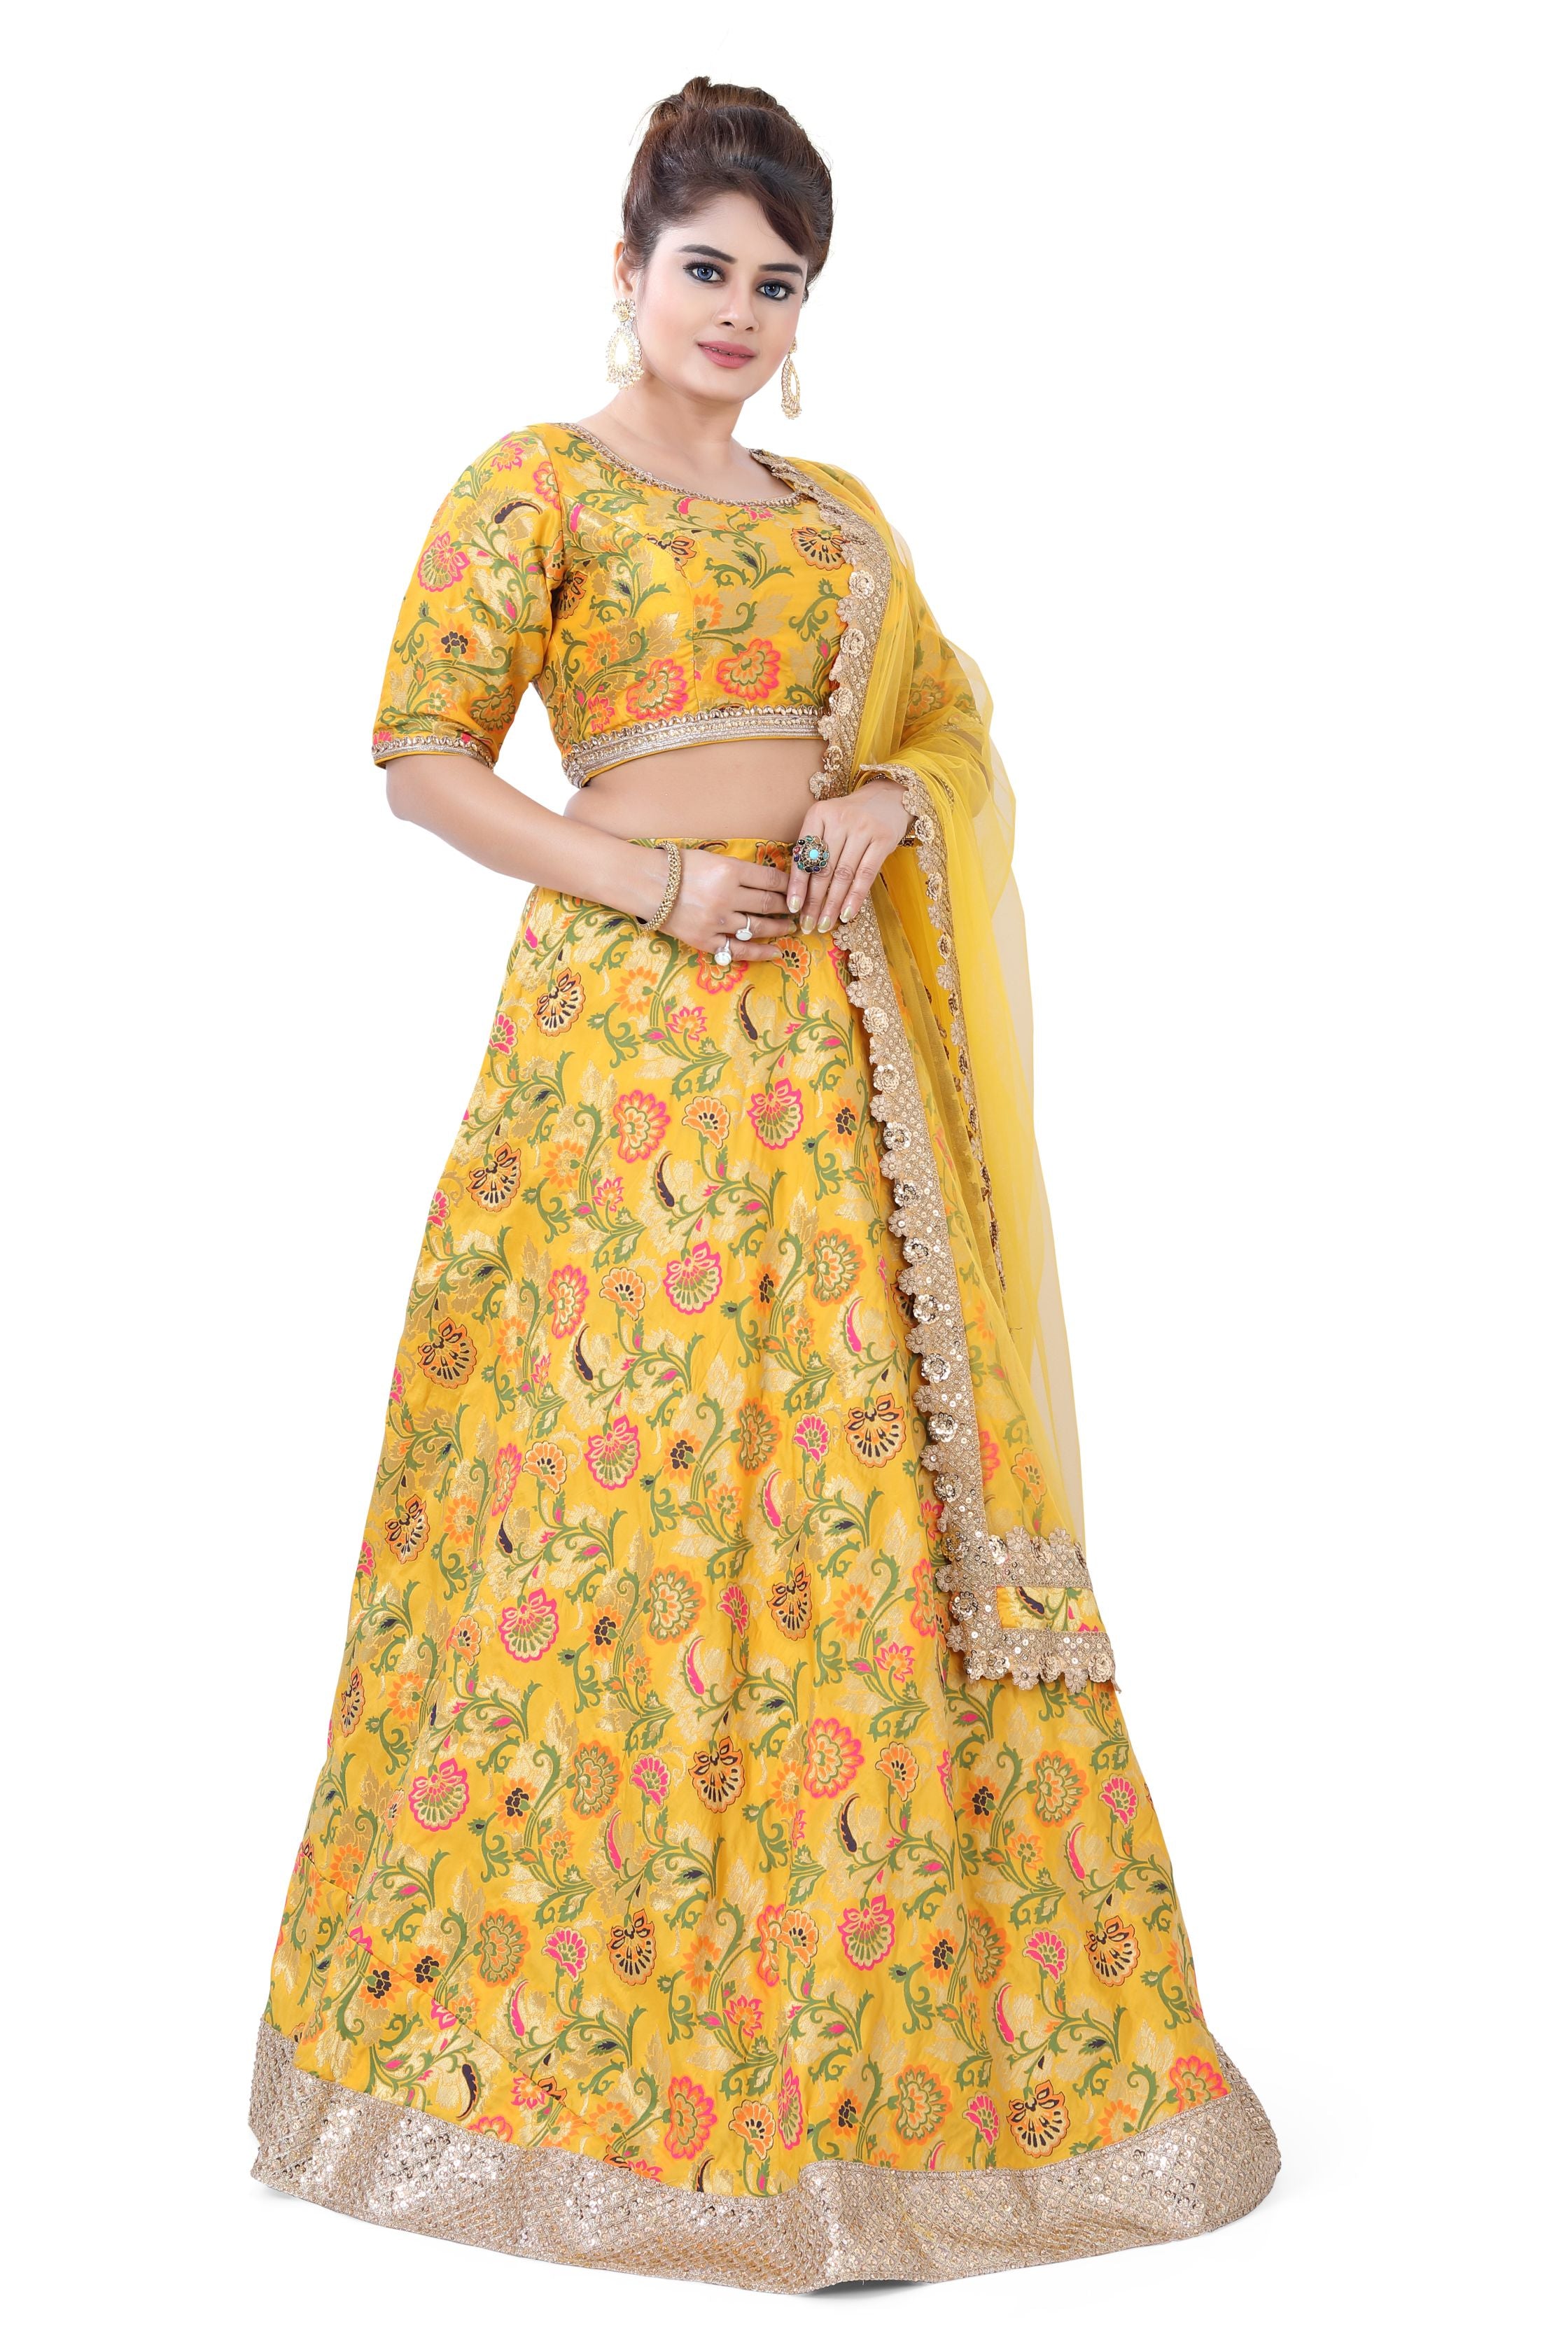 Banarasi Floral Part wear Lehenga Choli in Yellow colour